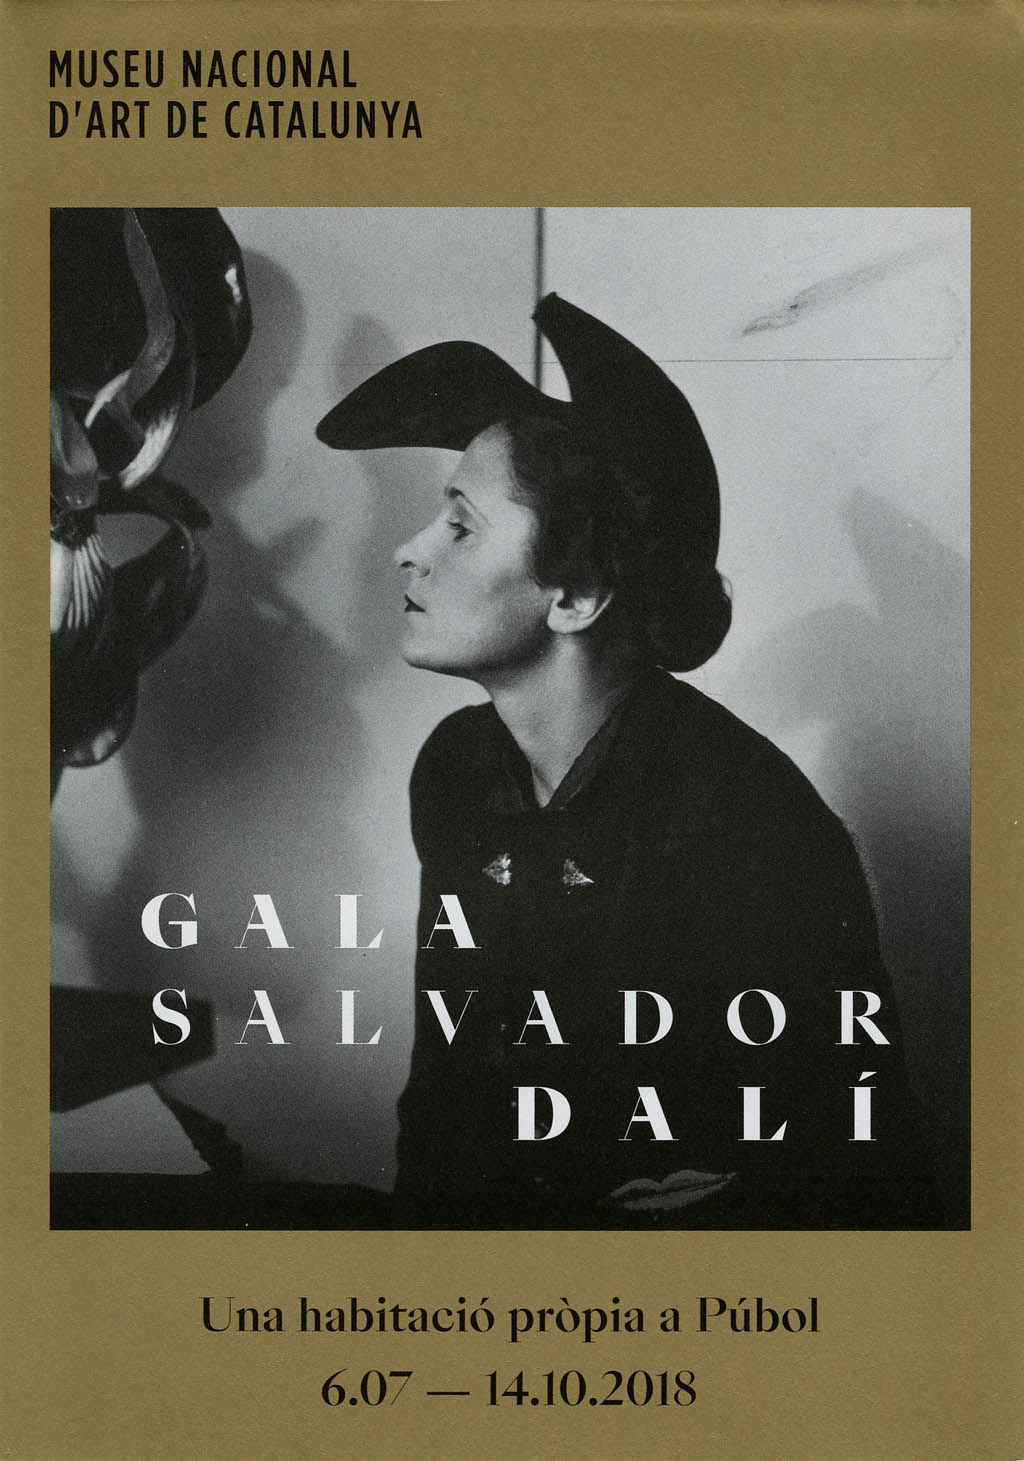 Gala Eluard Dali - 2018 Museu Nacional d'Art de Catalunya Exhibition Pamphlet